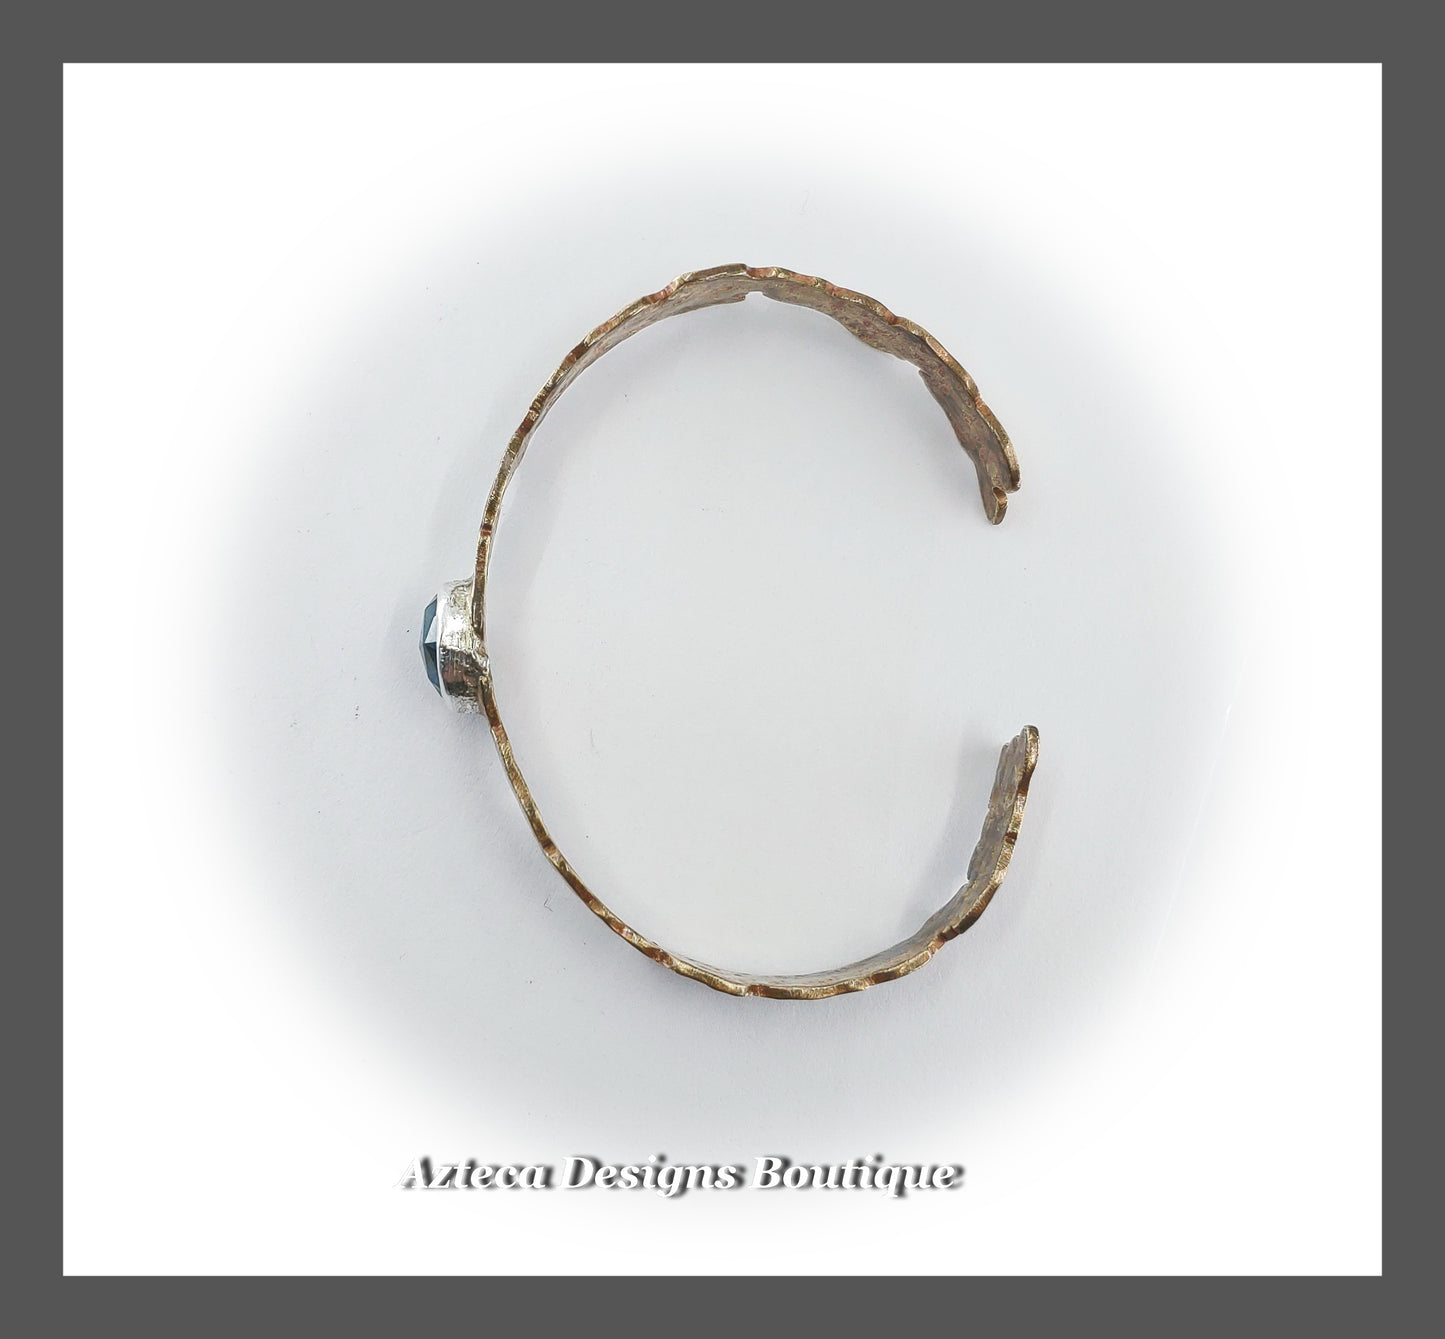 Narrow Teal Kyanite + Rustic Textured Brass Cuff Bracelet